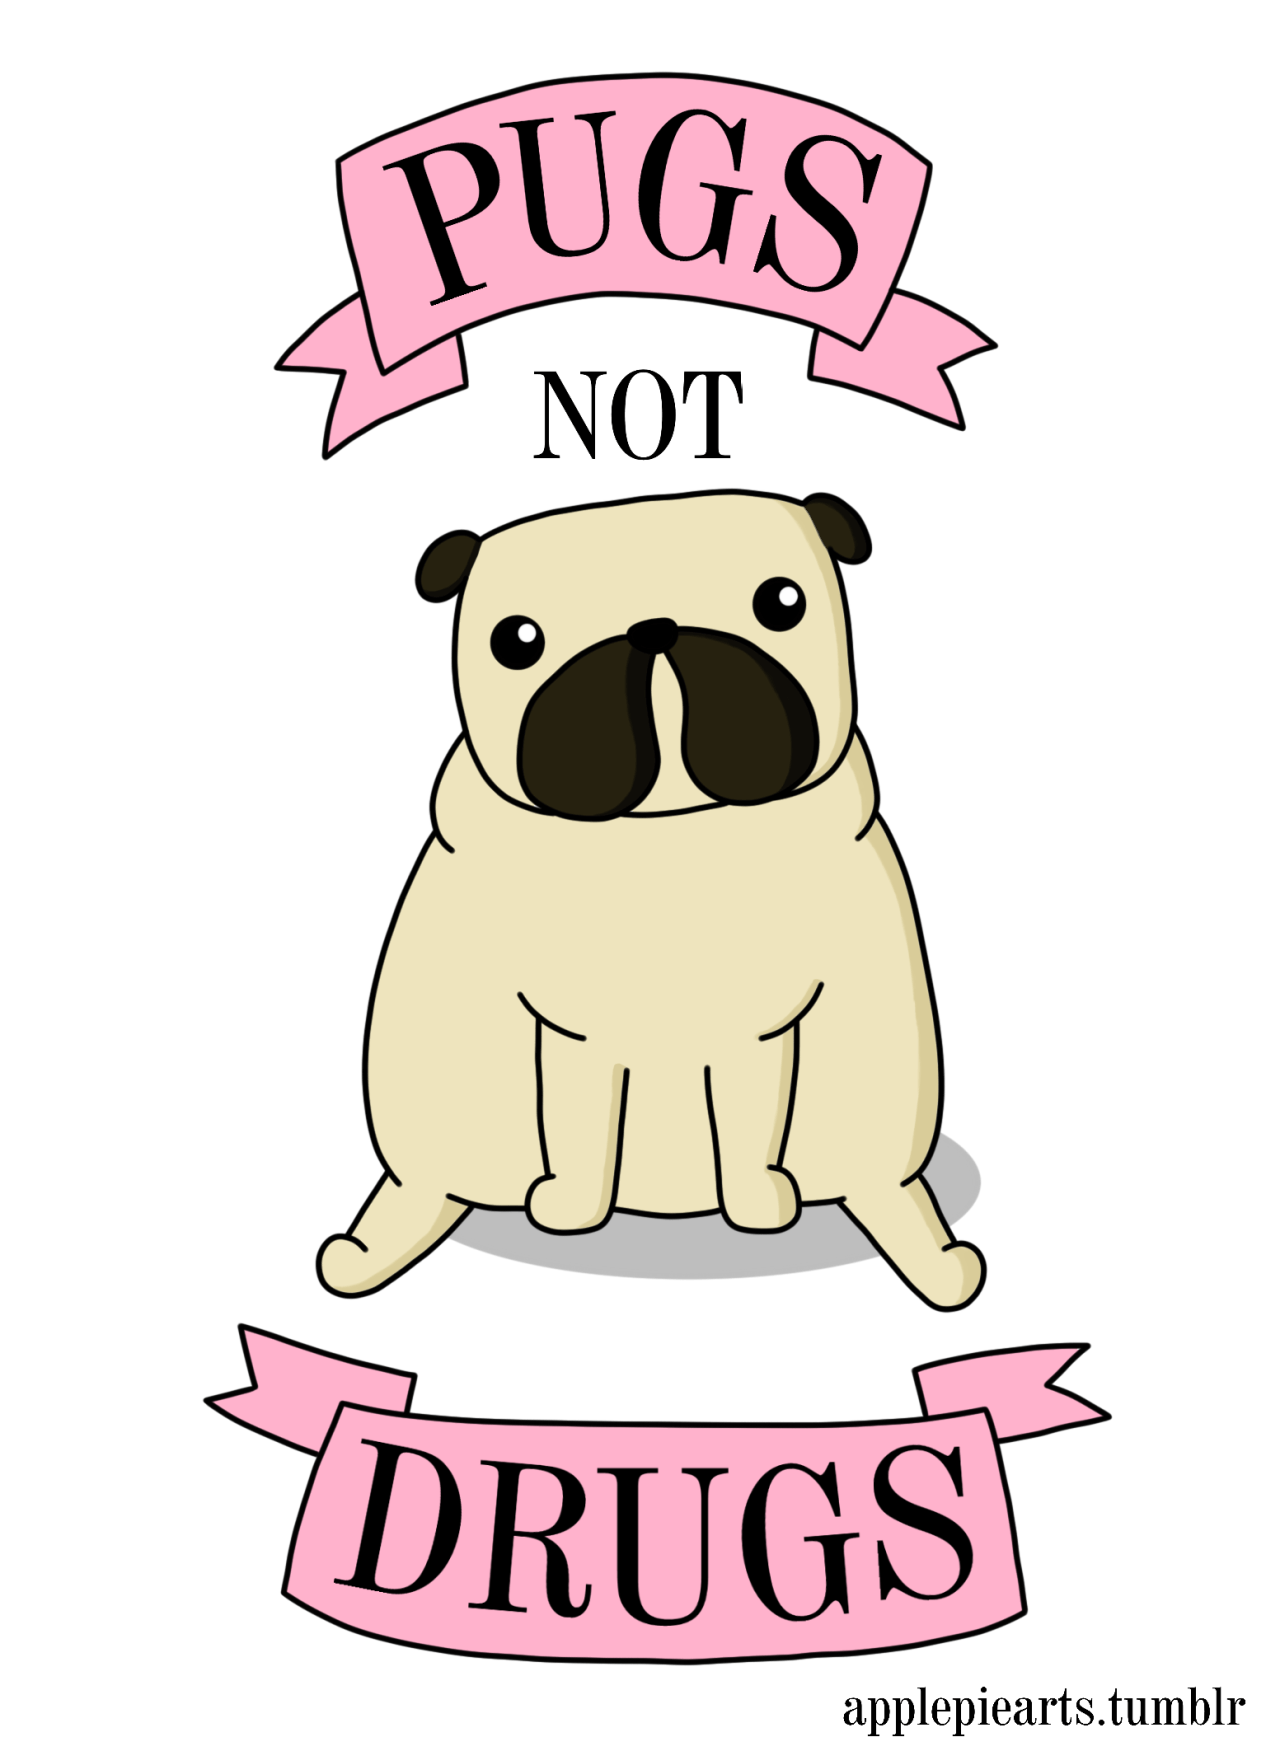 PUGS NOT DRUGS (redbubble//instagram). pugs